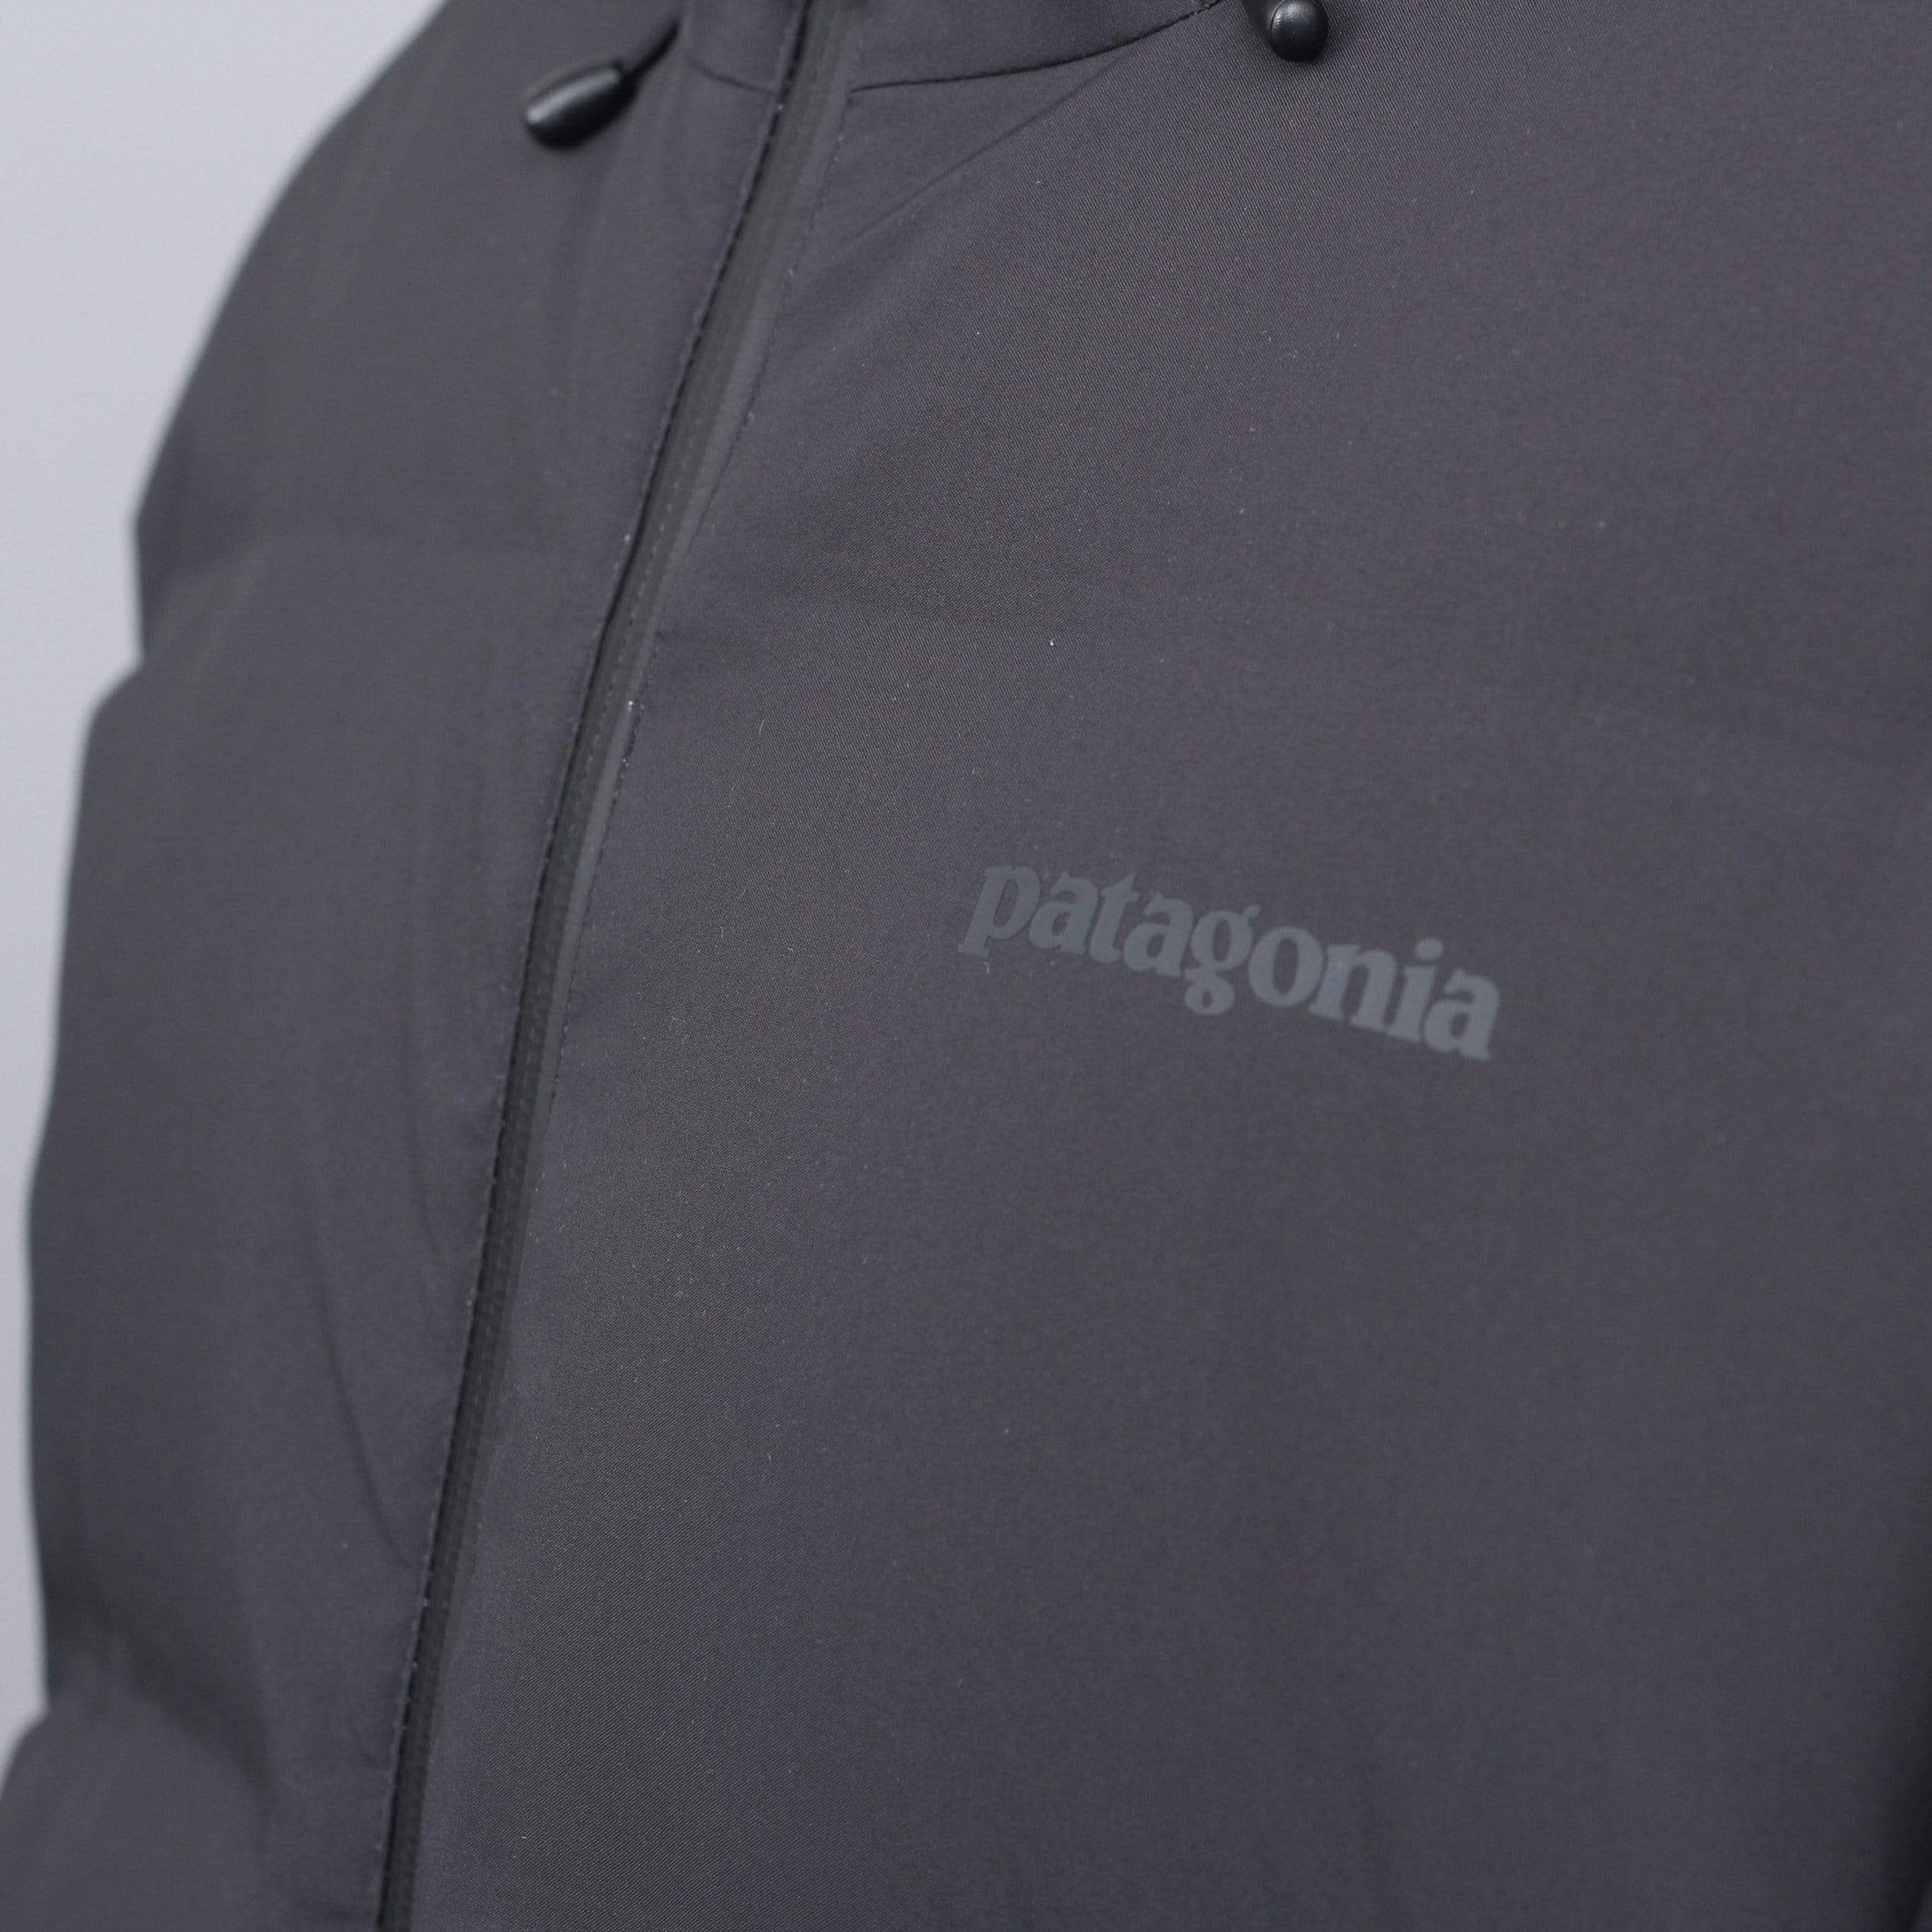 Patagonia Jackson Glacier Jacket Black